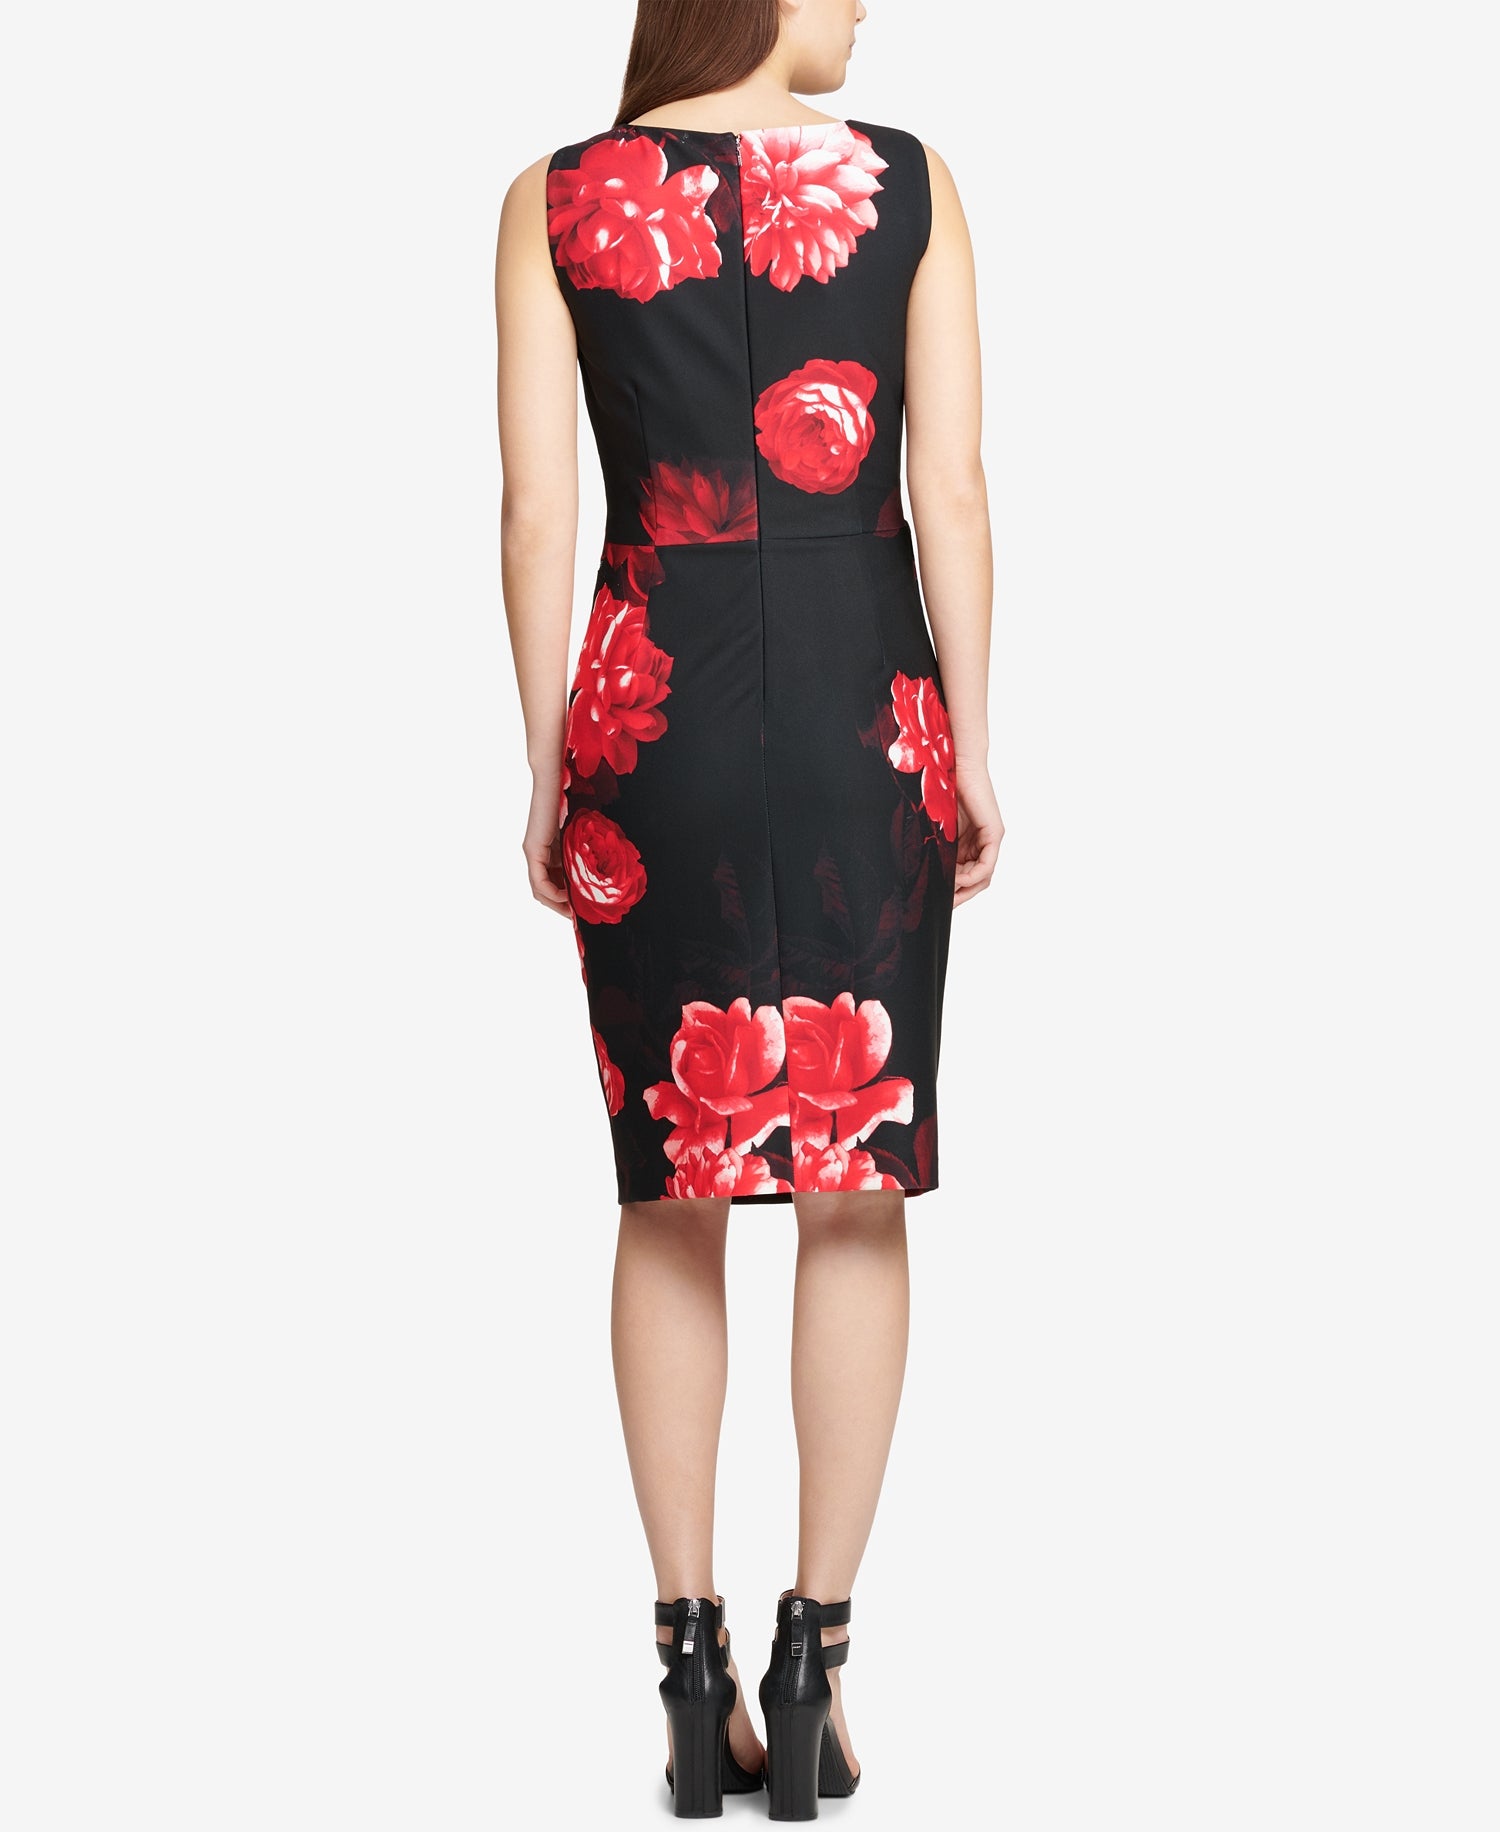 DKNY Womens Floral Print Sheath Dress